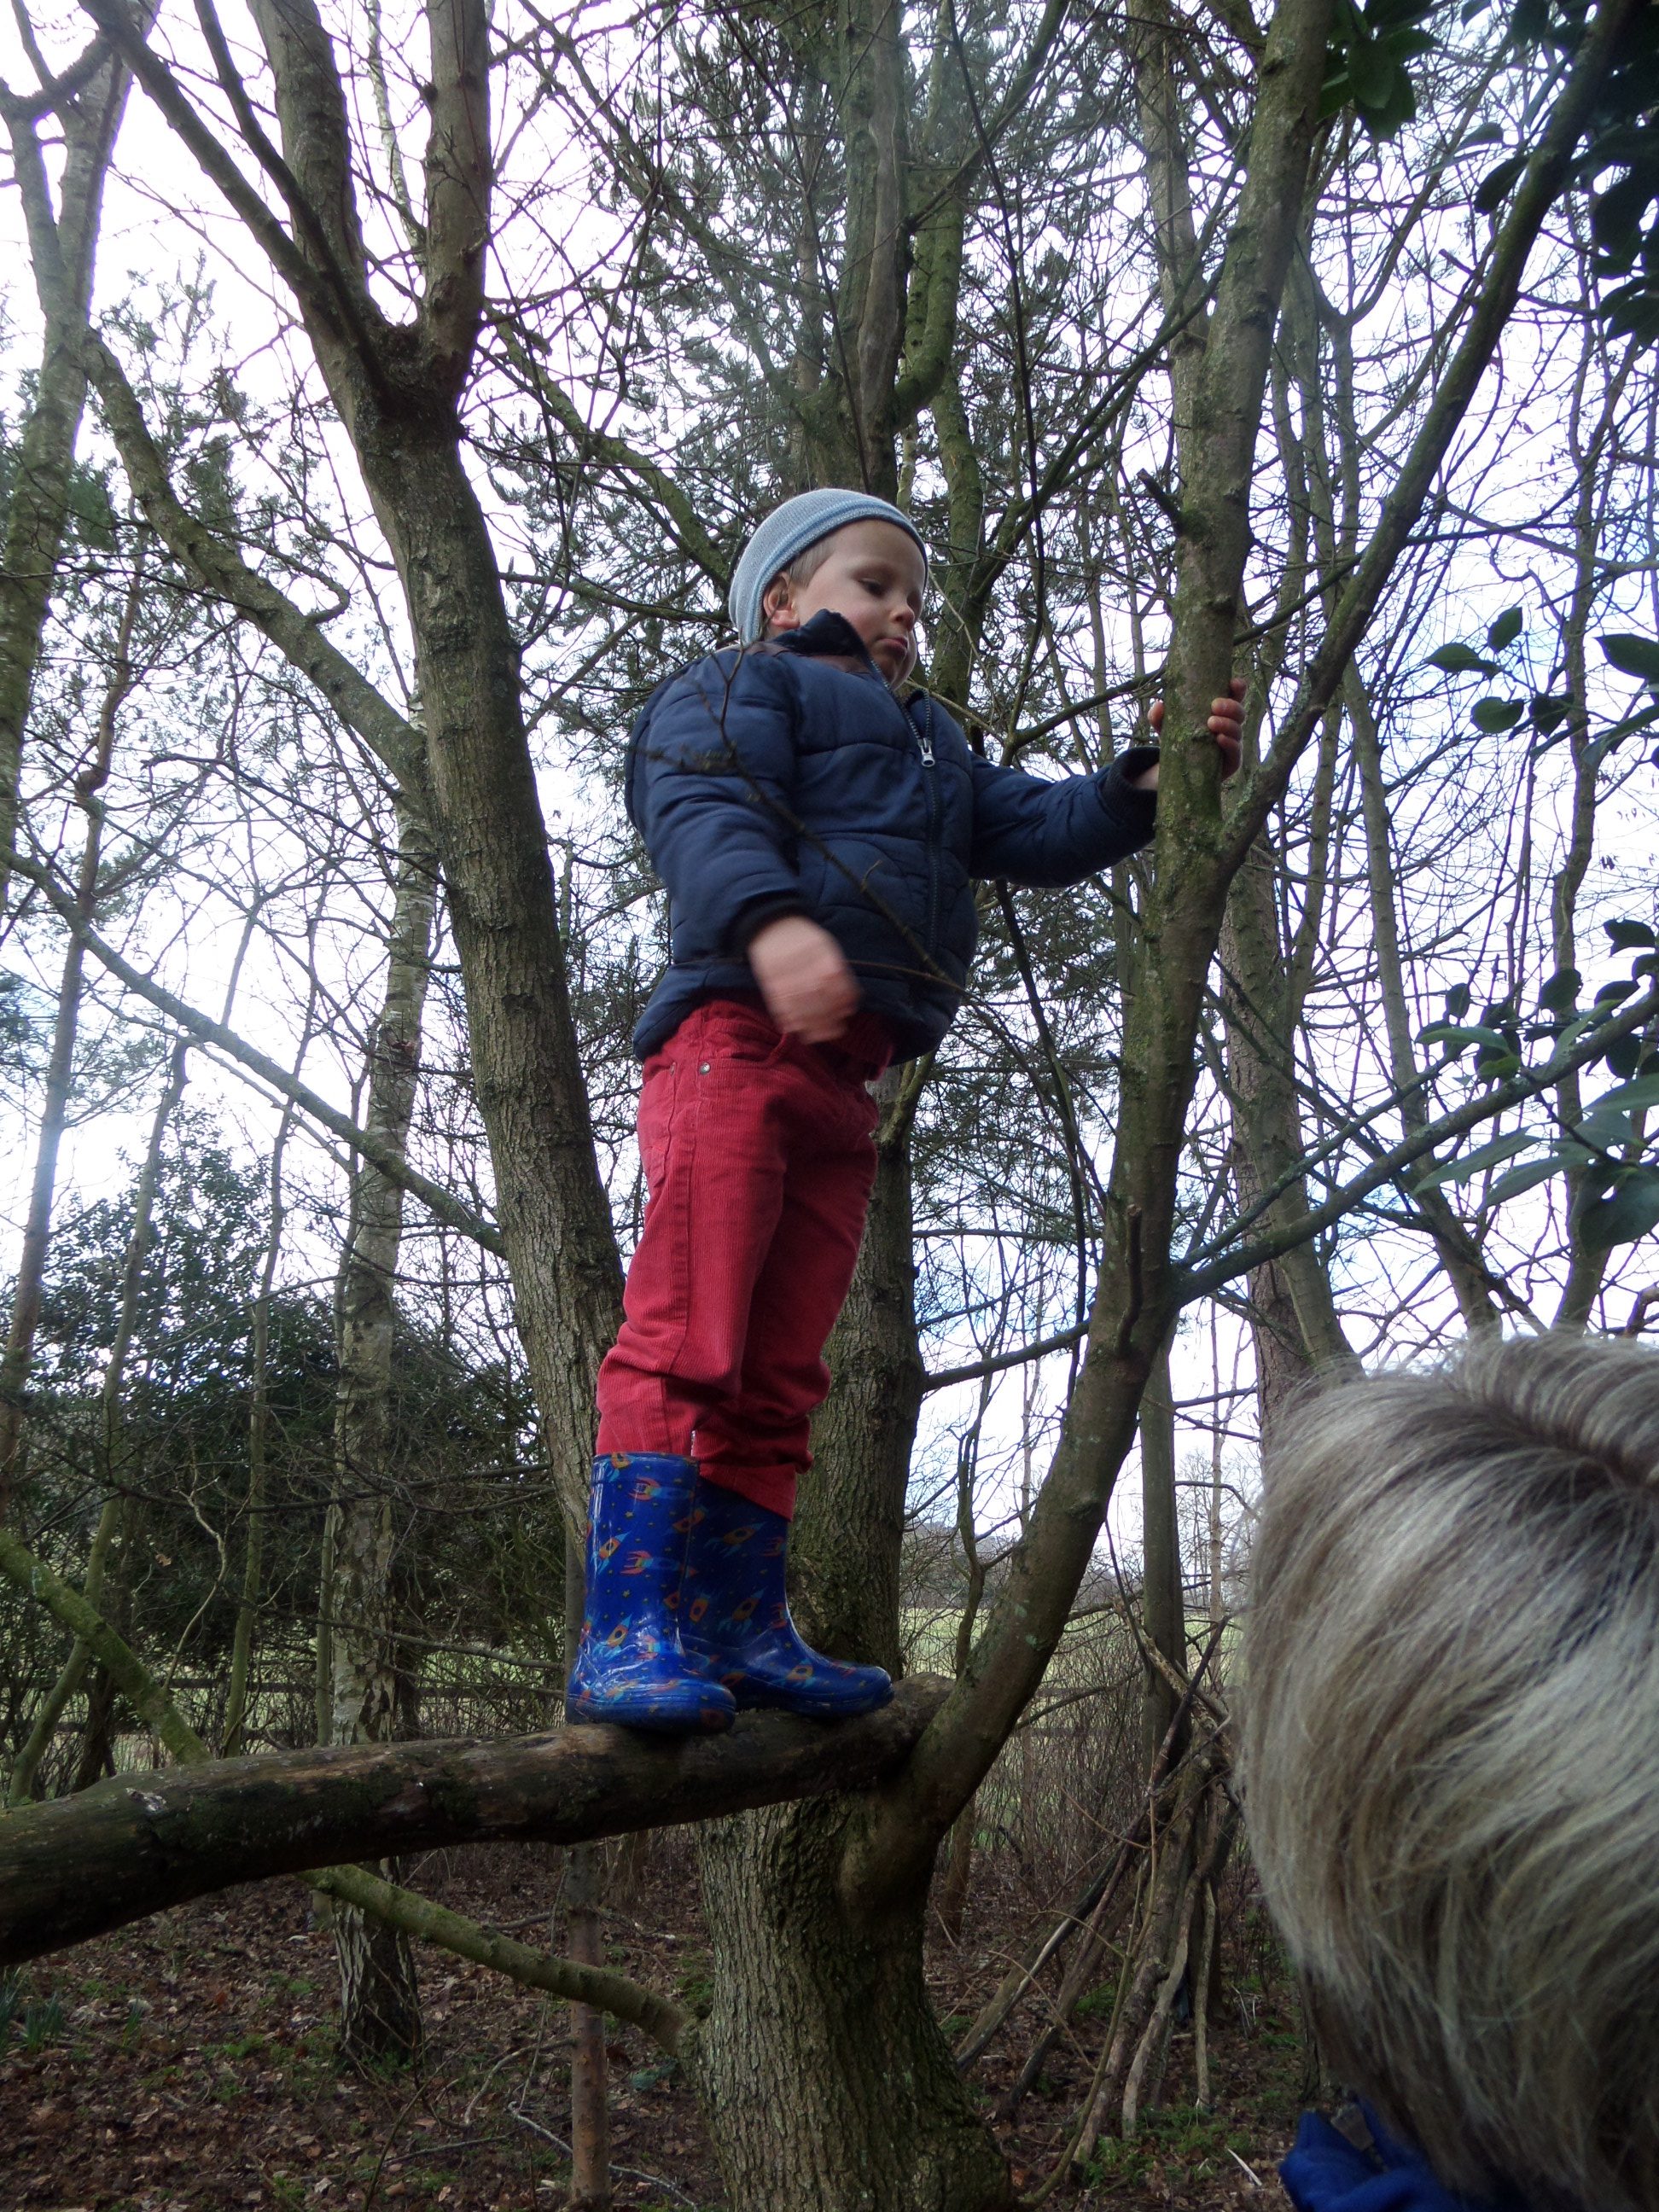 Climbing trees